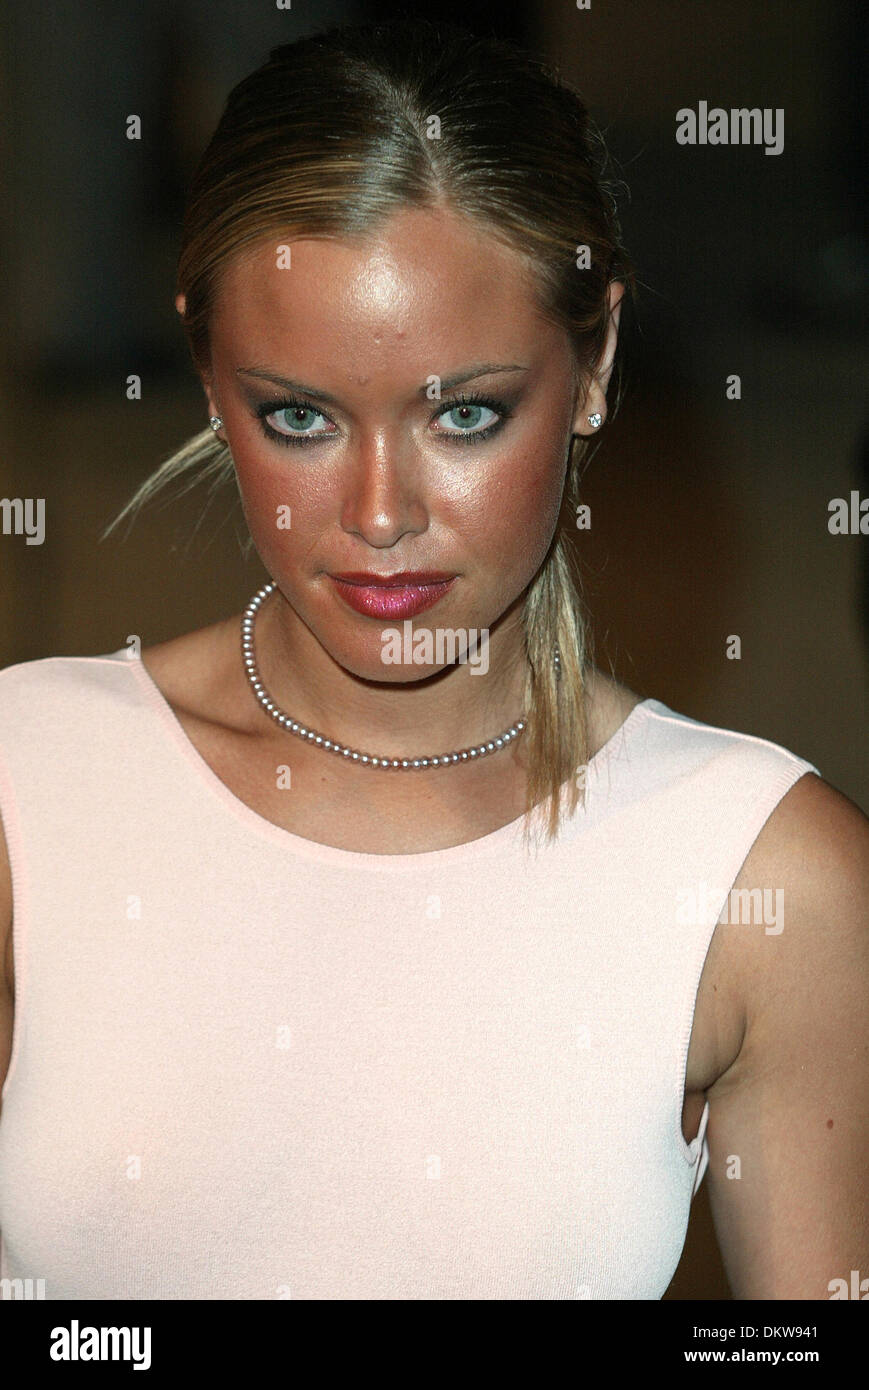 KRISTANNA LOKEN.ACTRESS.A.BEVERLY HILLS, LOS ANGELES, US.24/03/2002.LA1684 Stock Photo